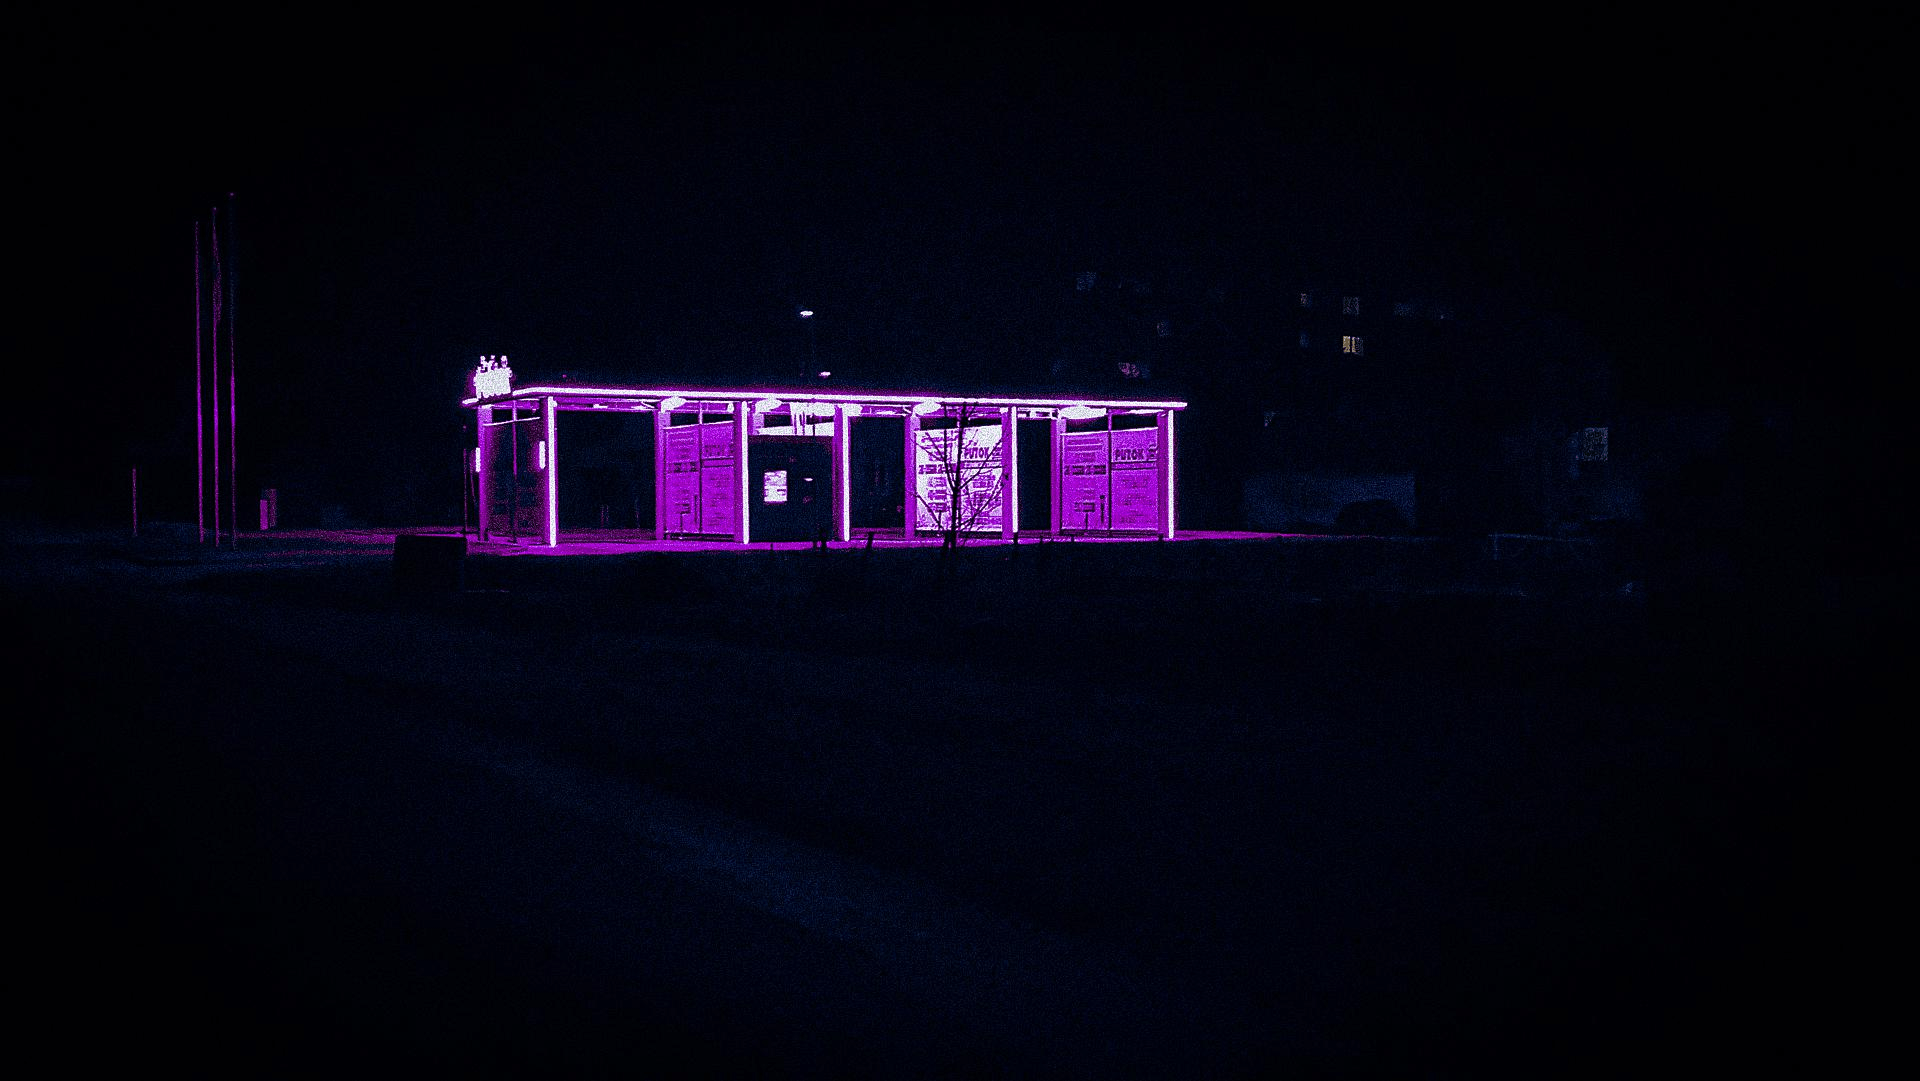 A purple lit up building in the night - Dark vaporwave